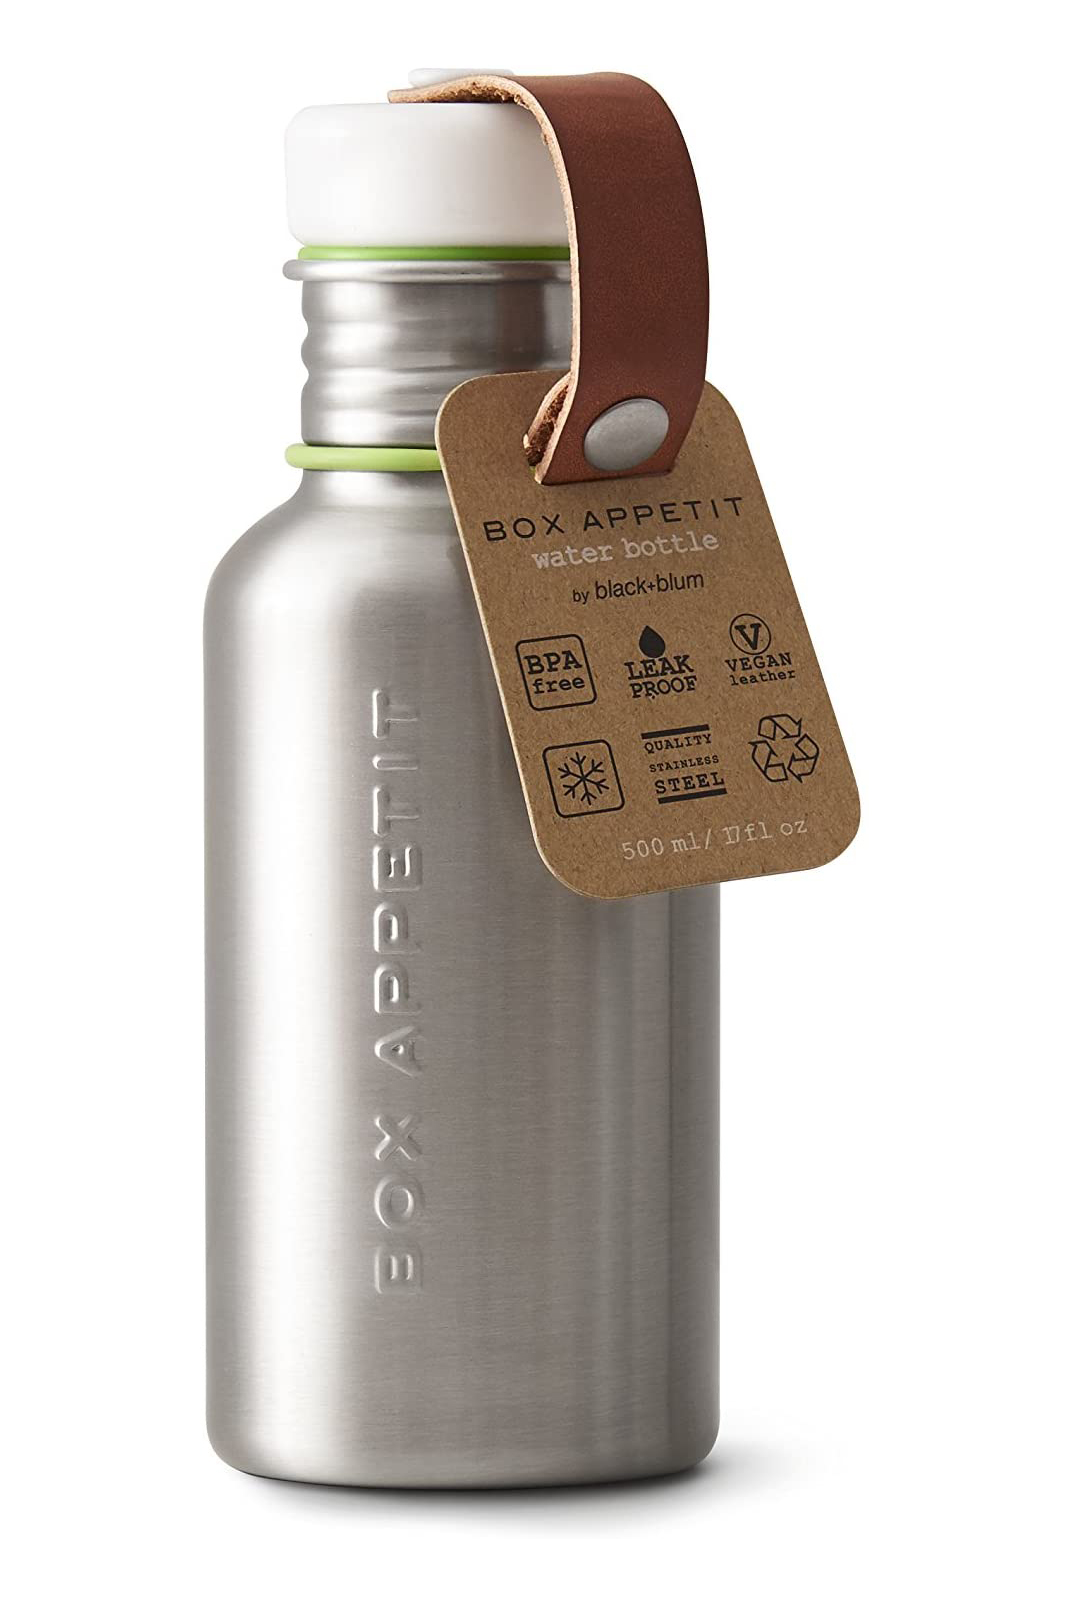 Water Bottle, 17 fl oz (500 ml ), Black Stainless Steel, In stock!